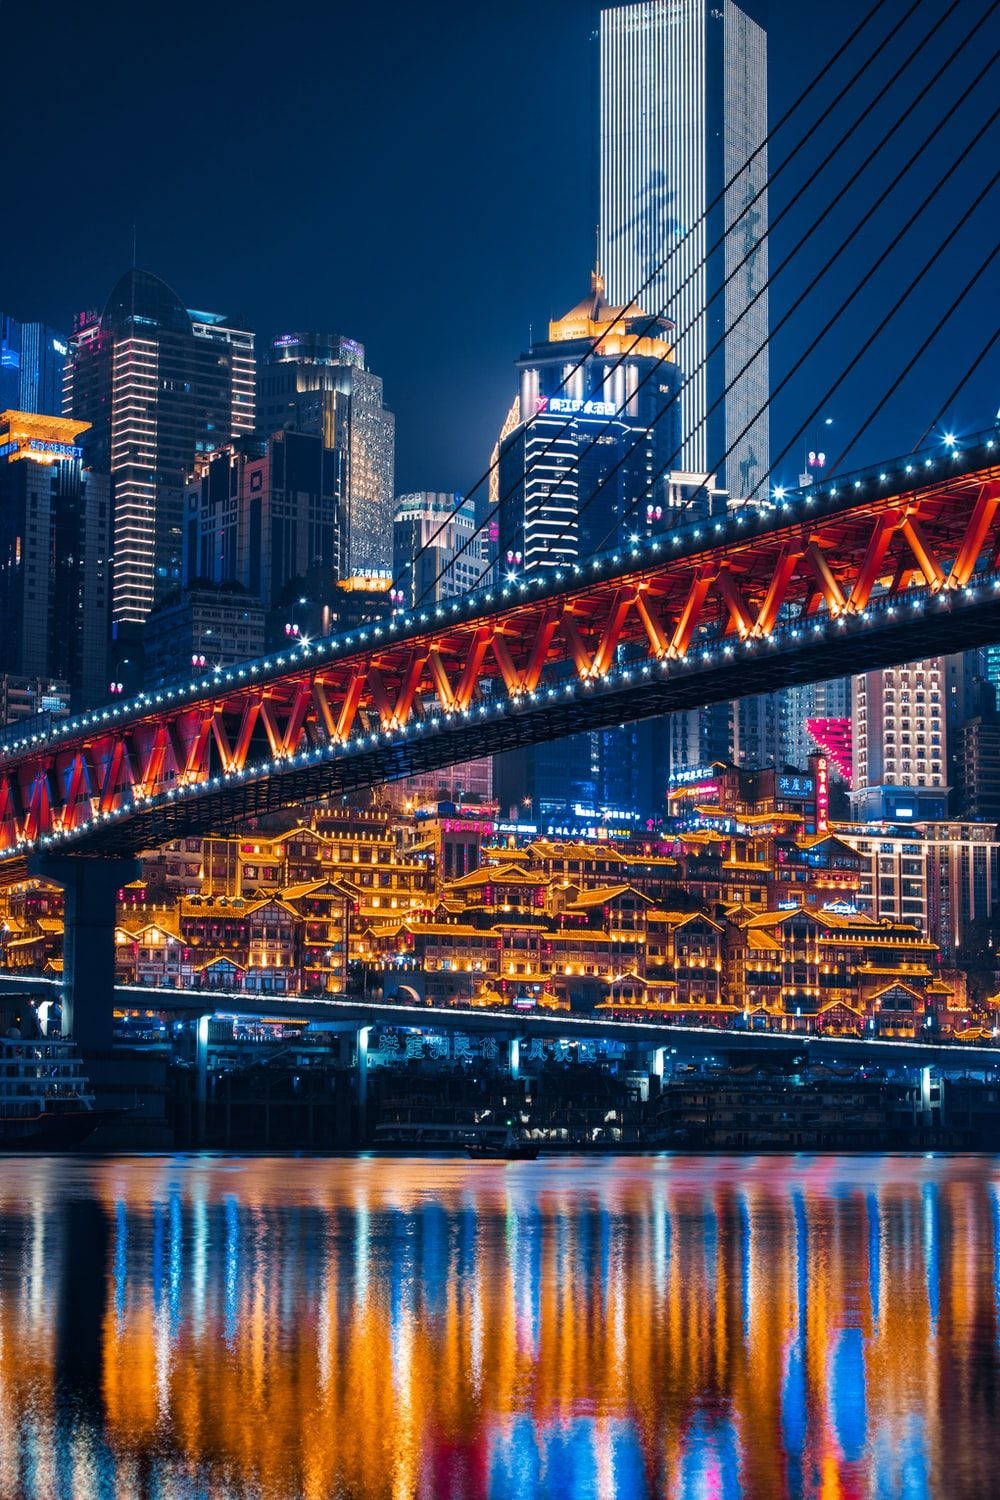 Cool Pfp Chongqing Twin River Bridges At Night Picture